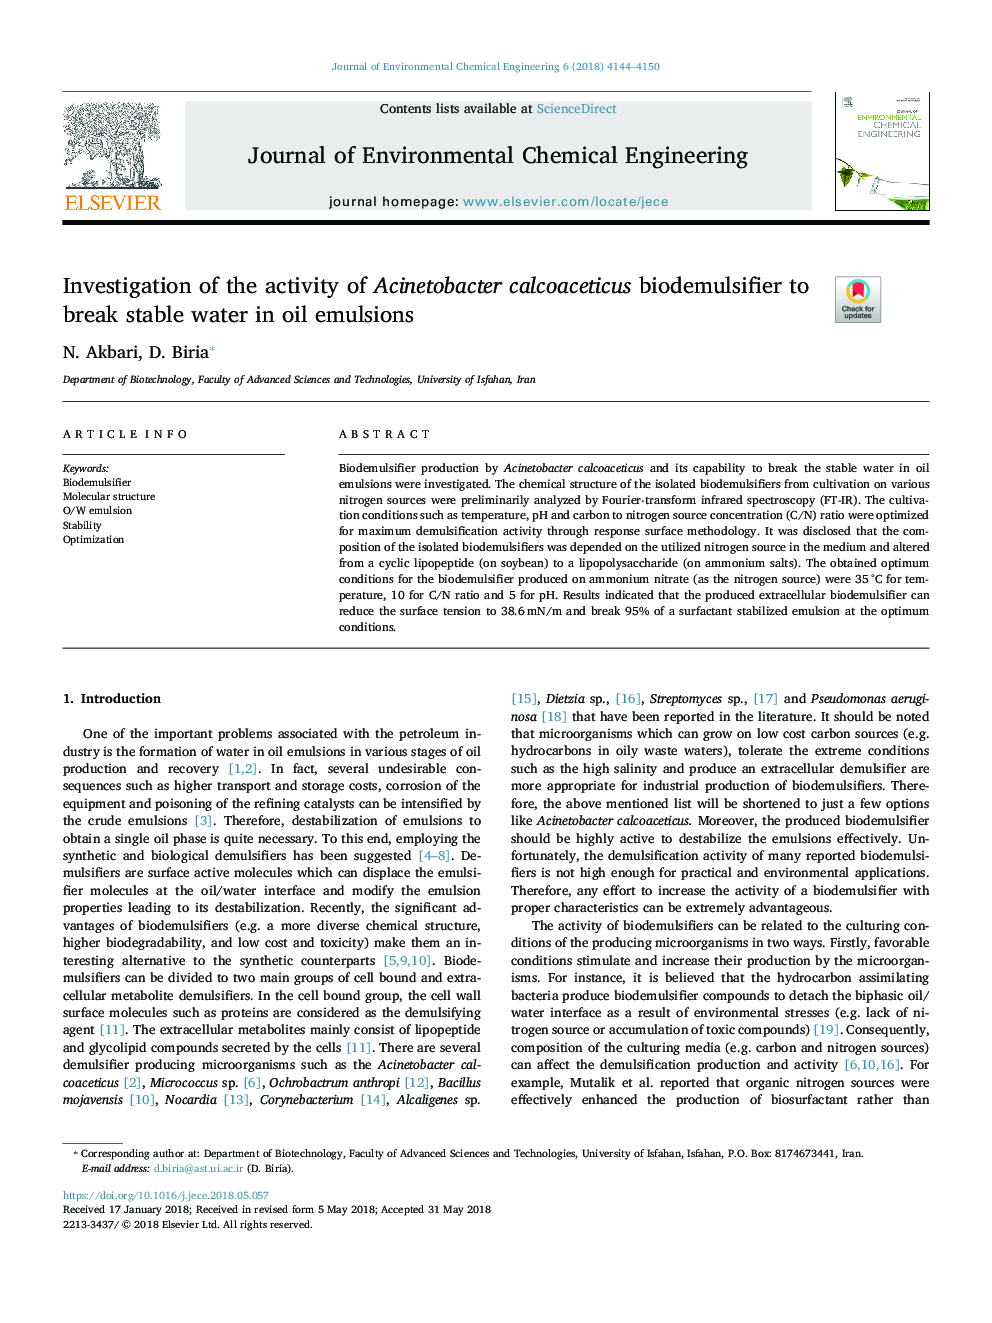 Investigation of the activity of Acinetobacter calcoaceticus biodemulsifier to break stable water in oil emulsions